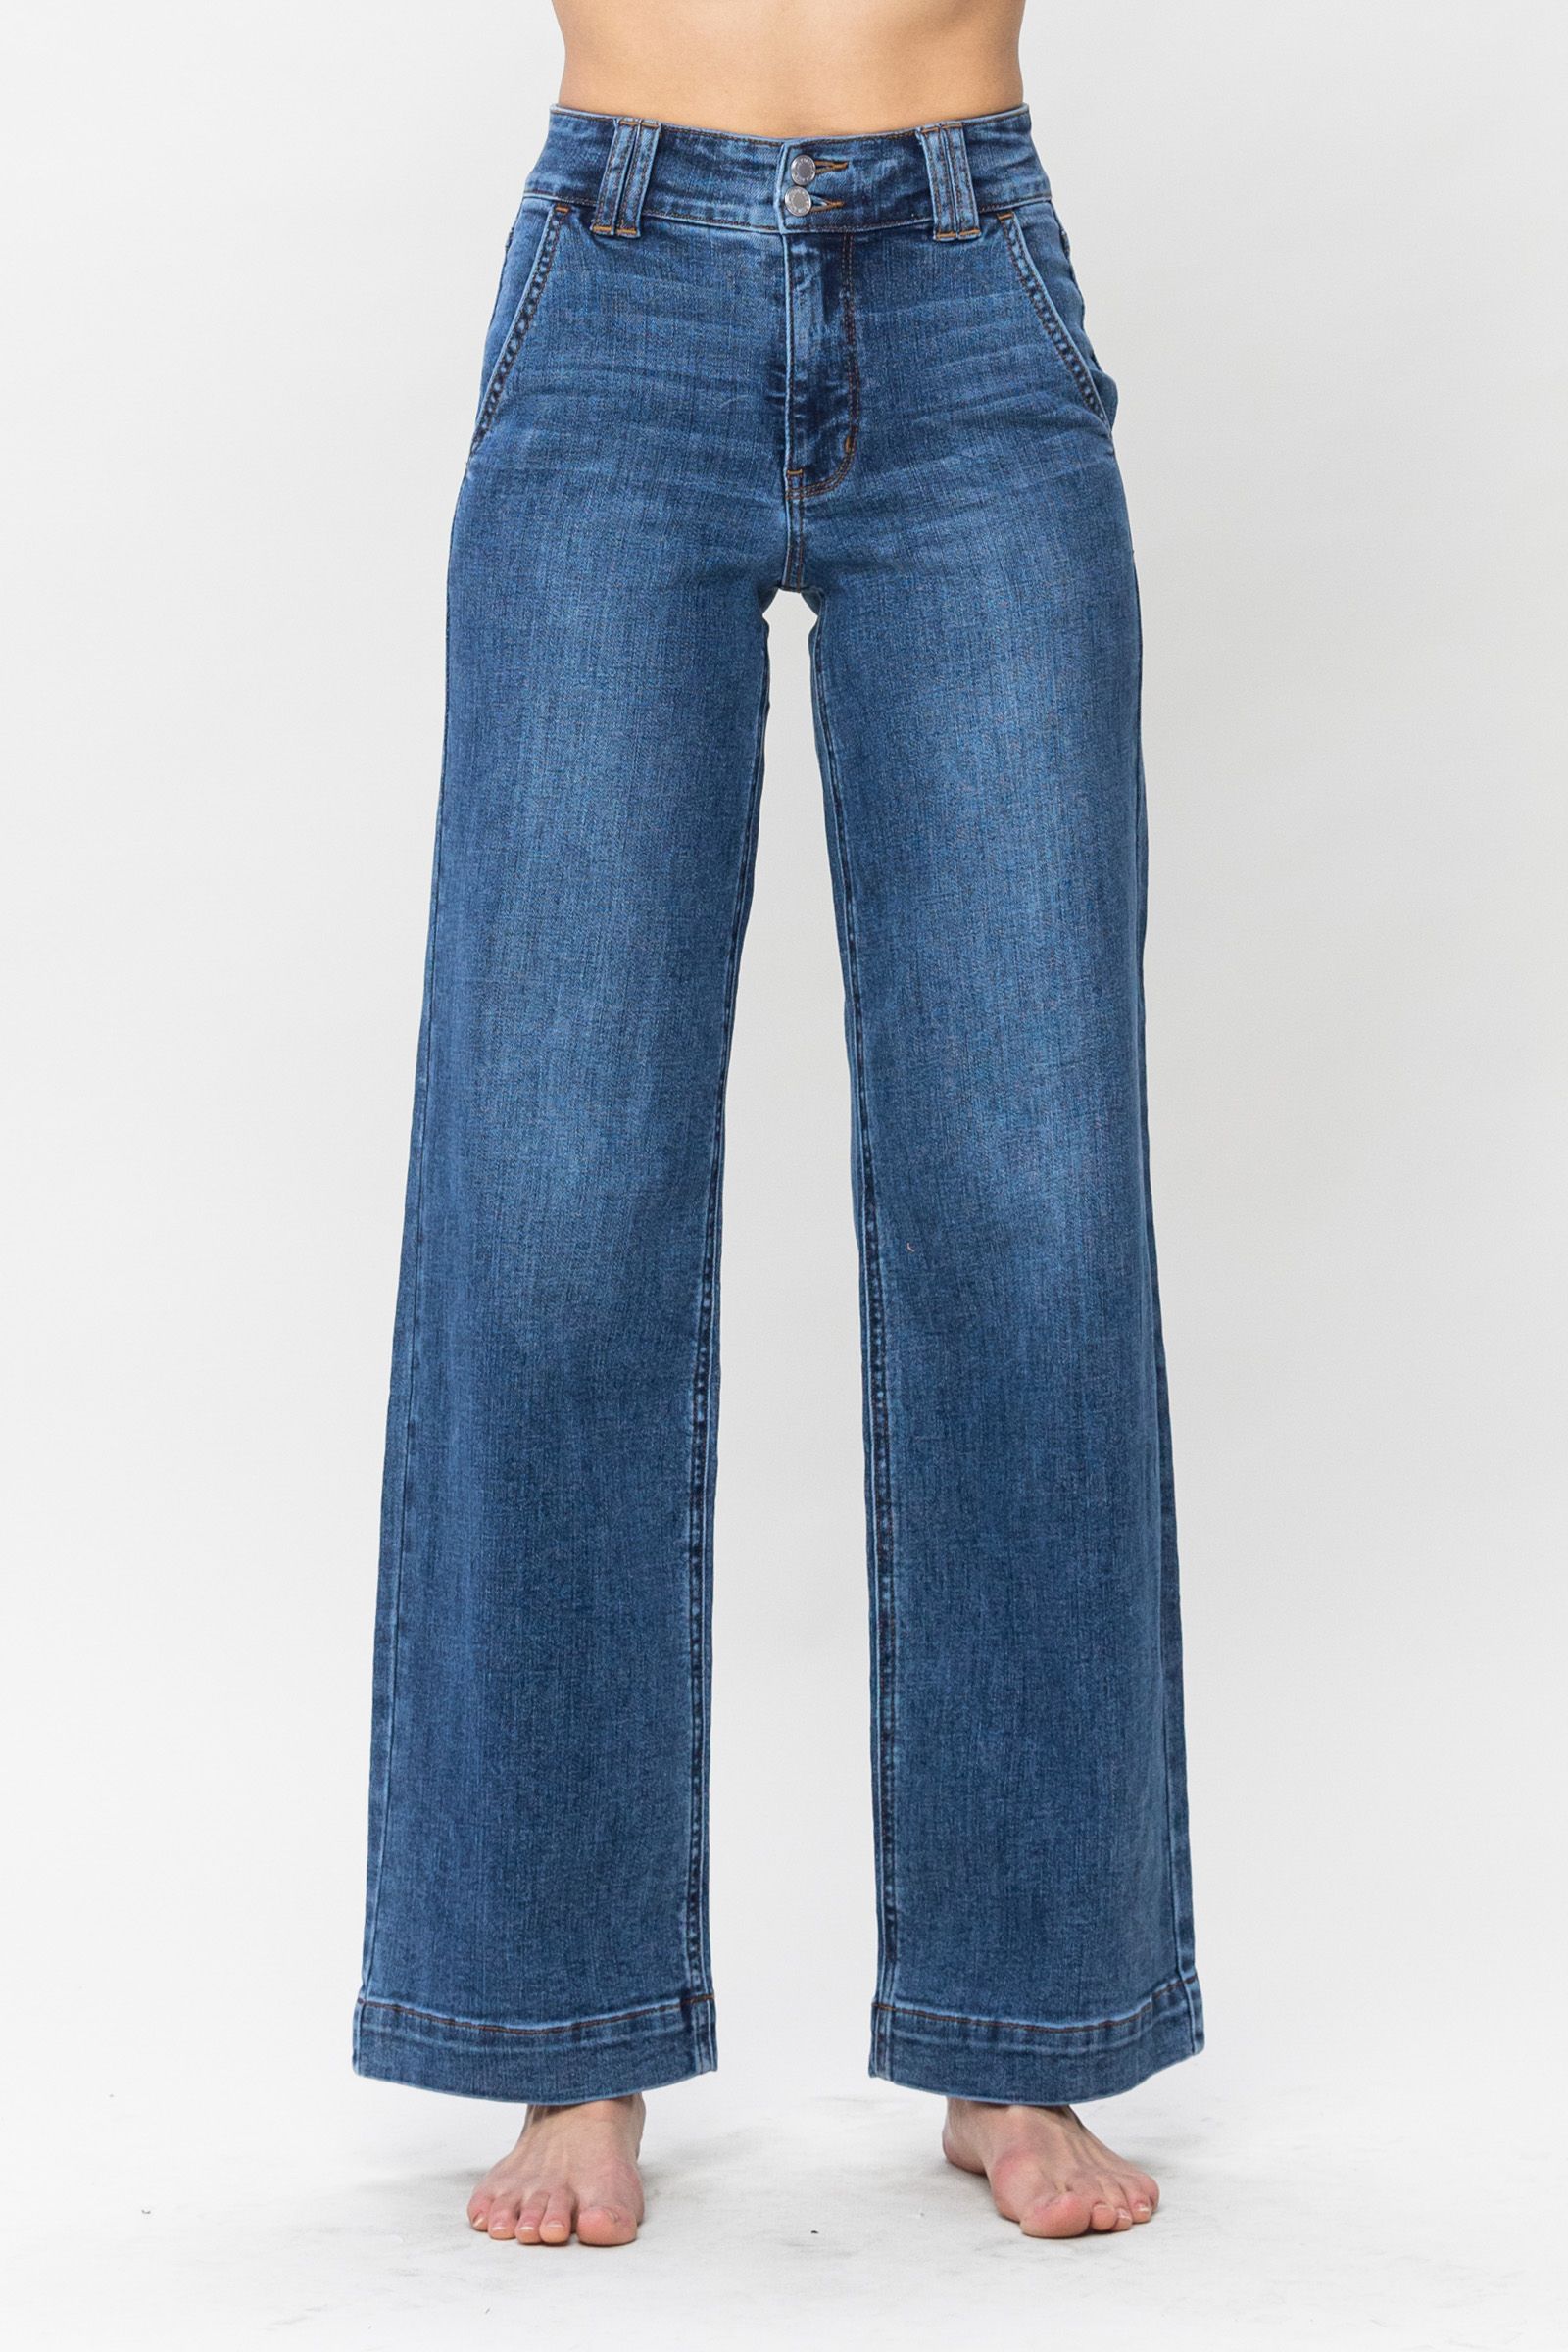 judy blue pickpocket jeans